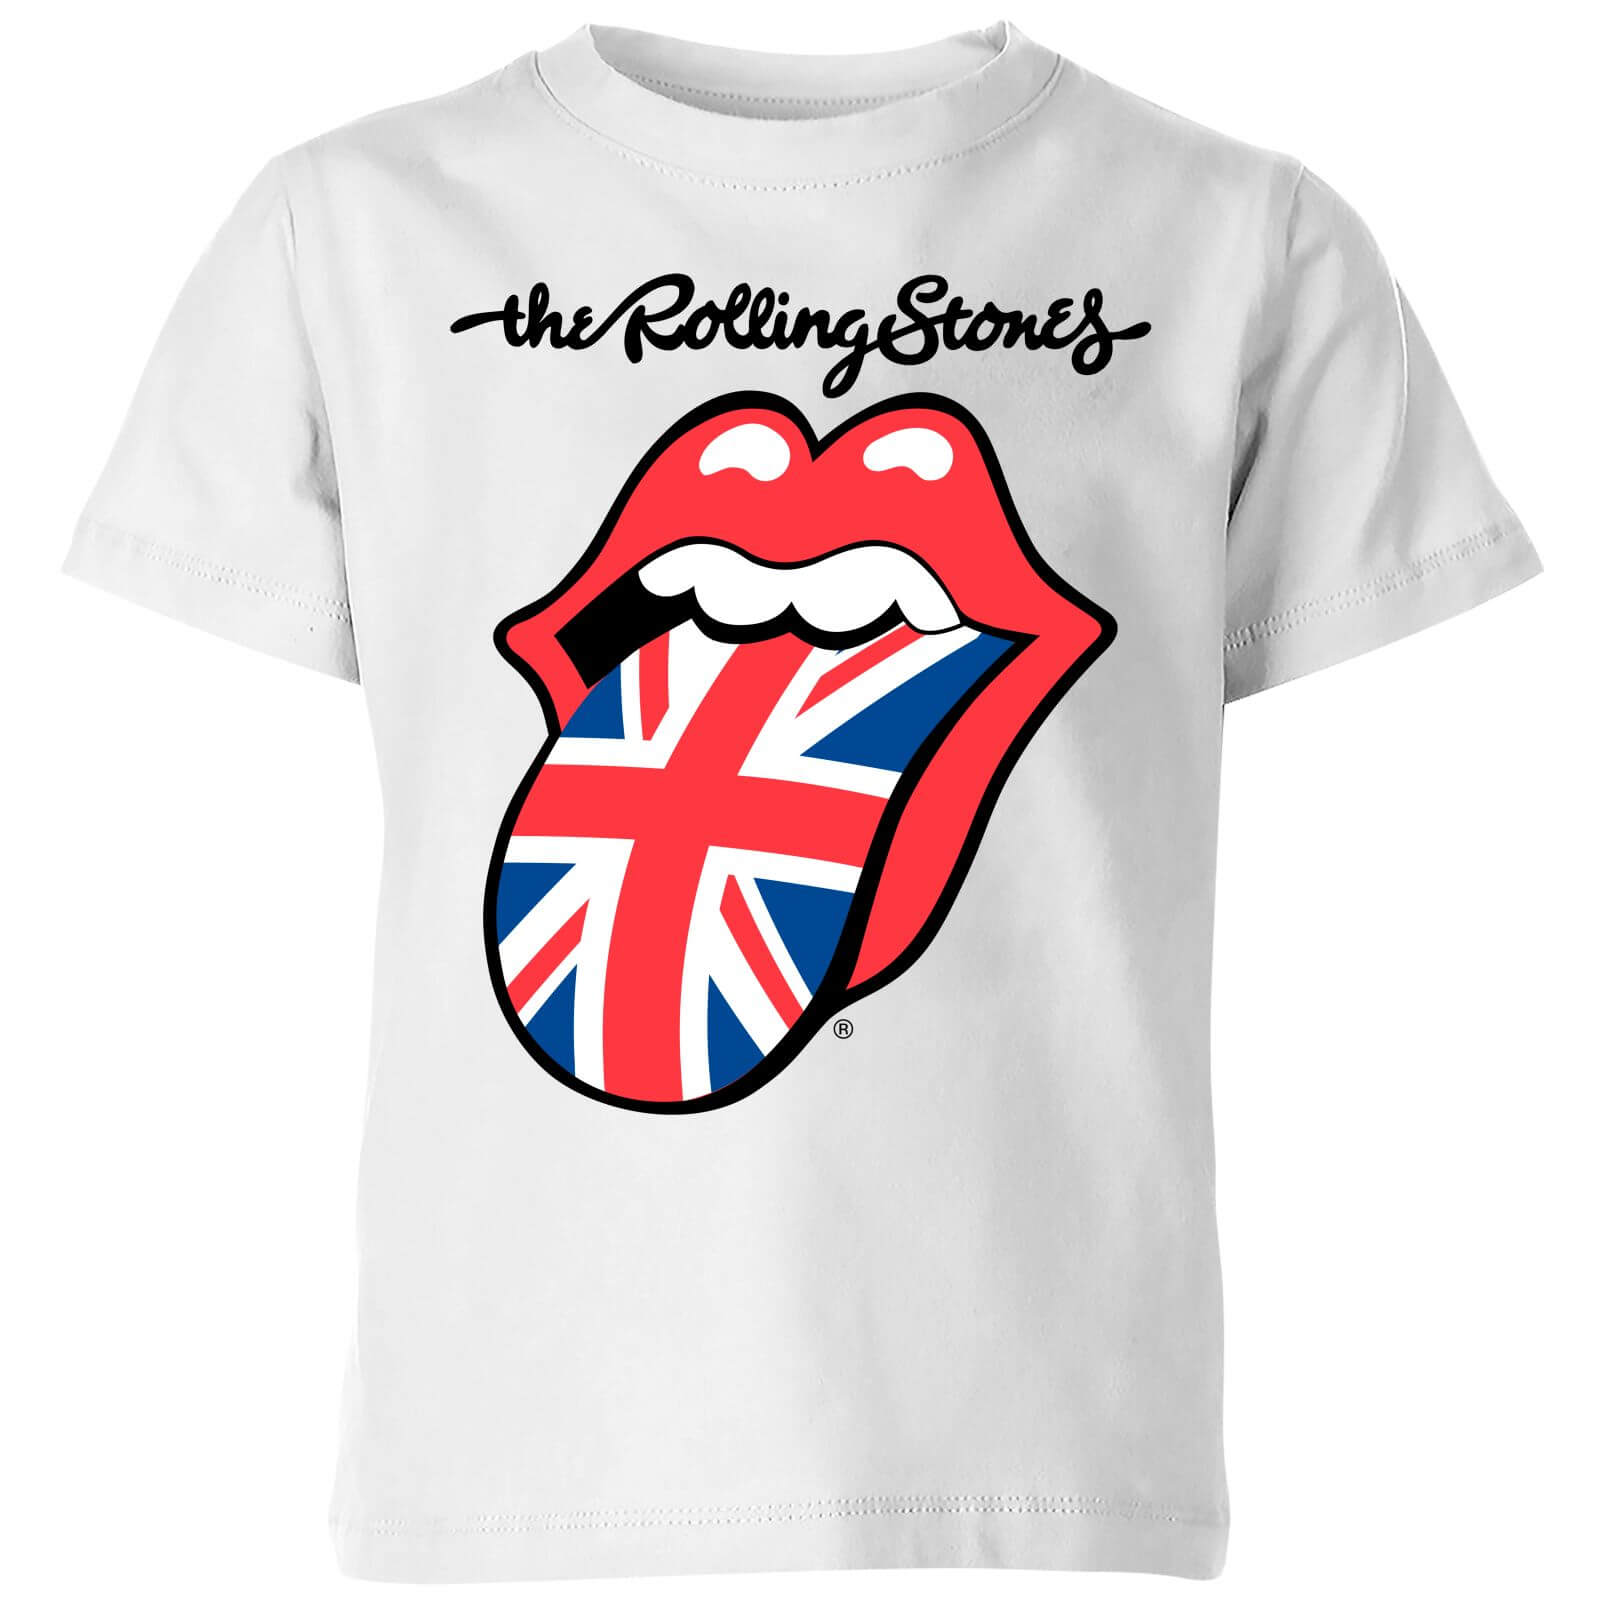 Rolling stones white shirt